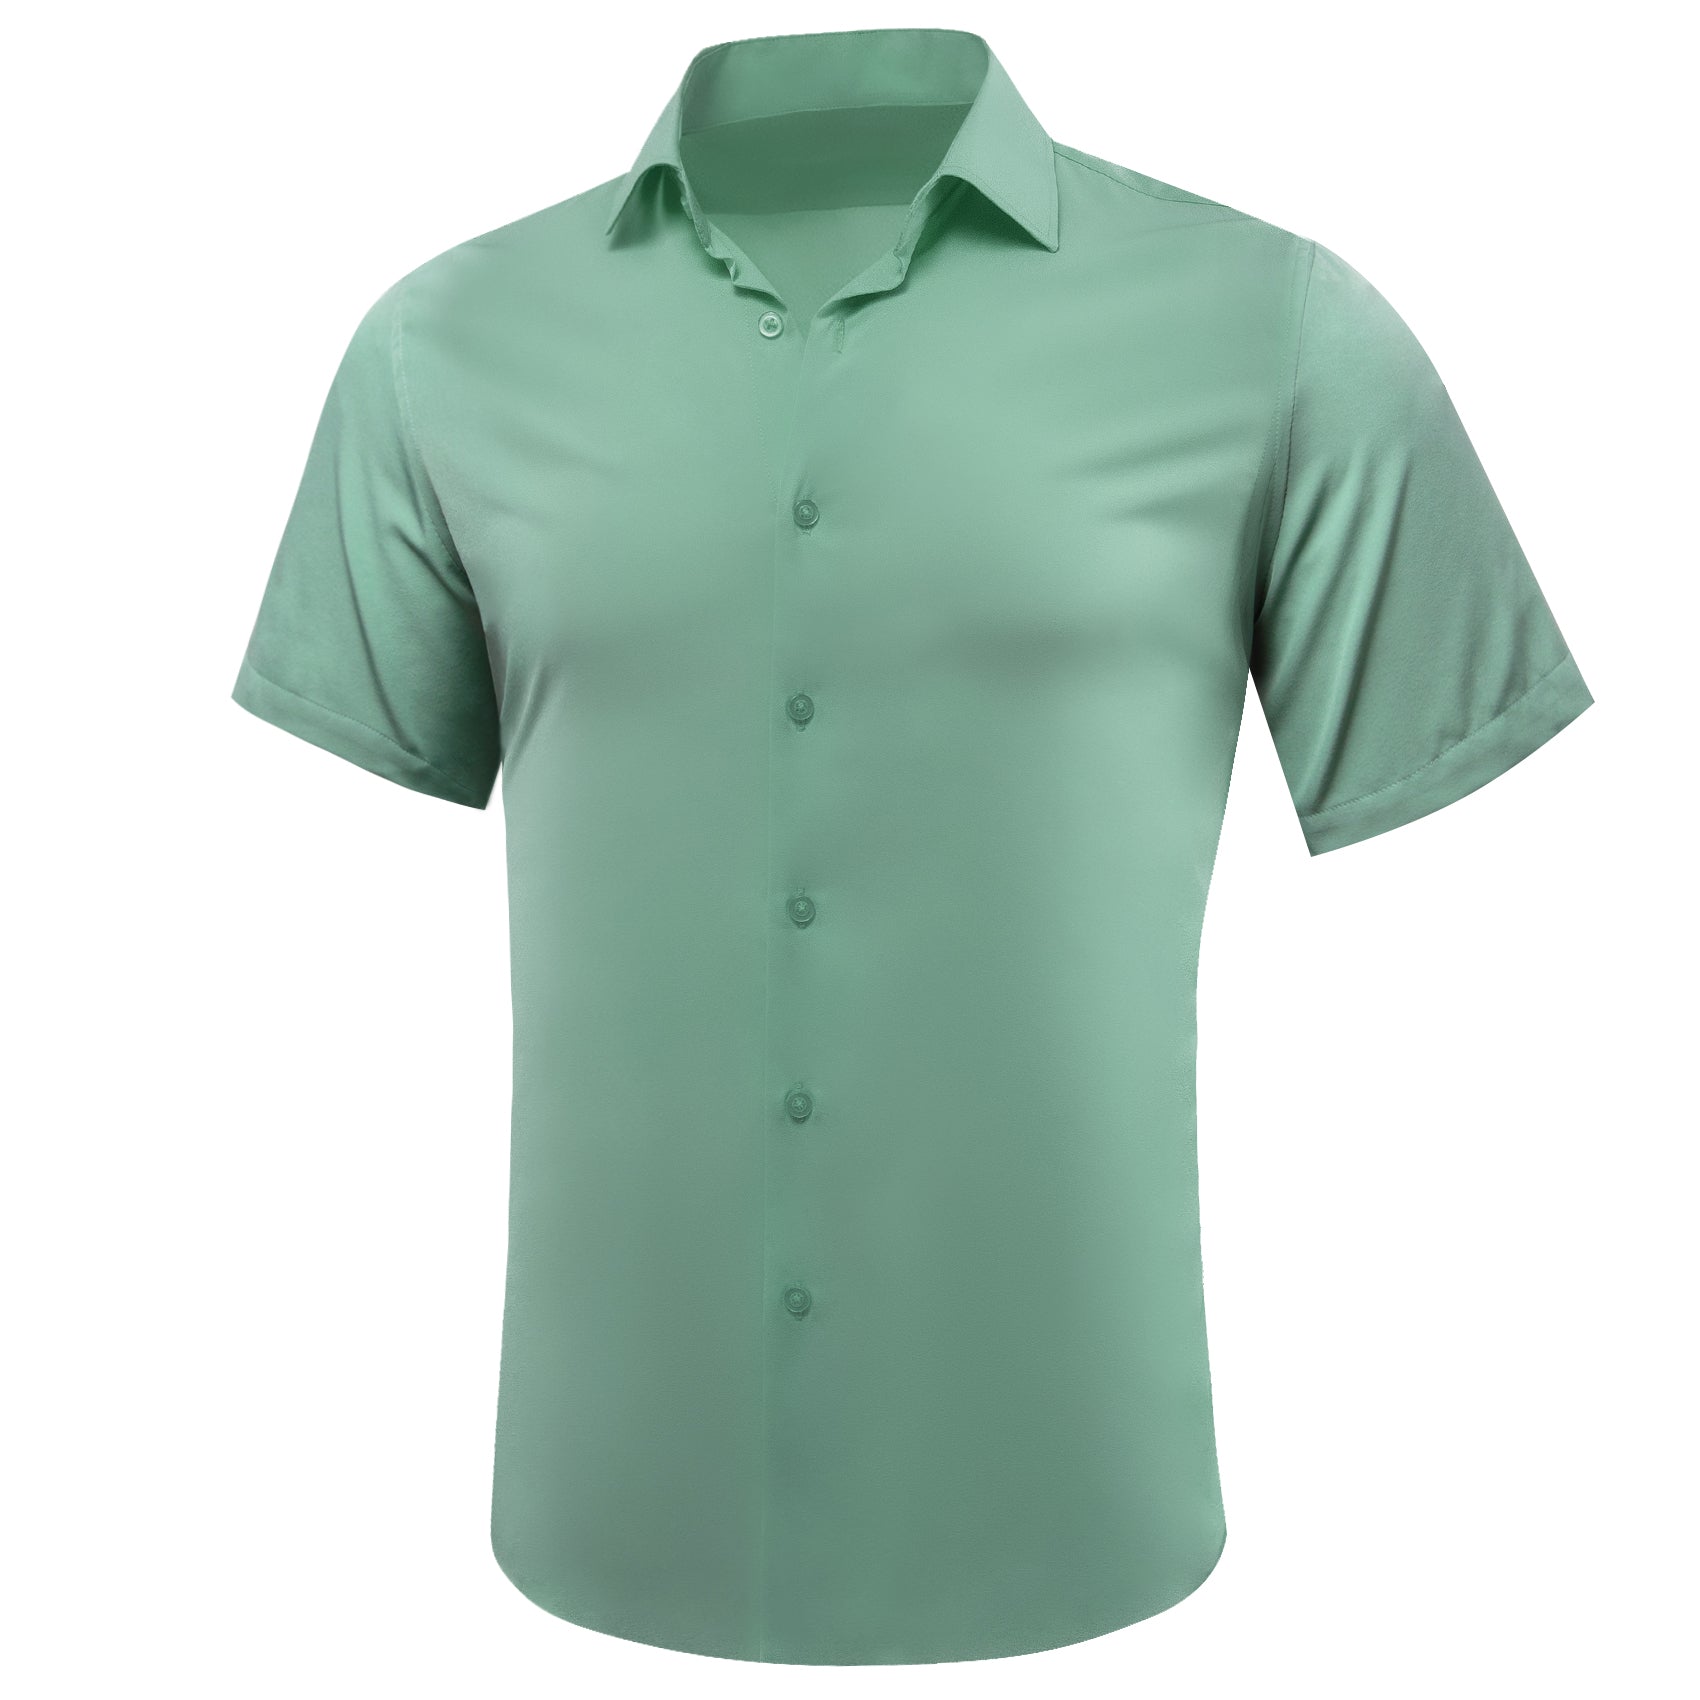 Barry.wang Green Solid Short Sleeves Shirt